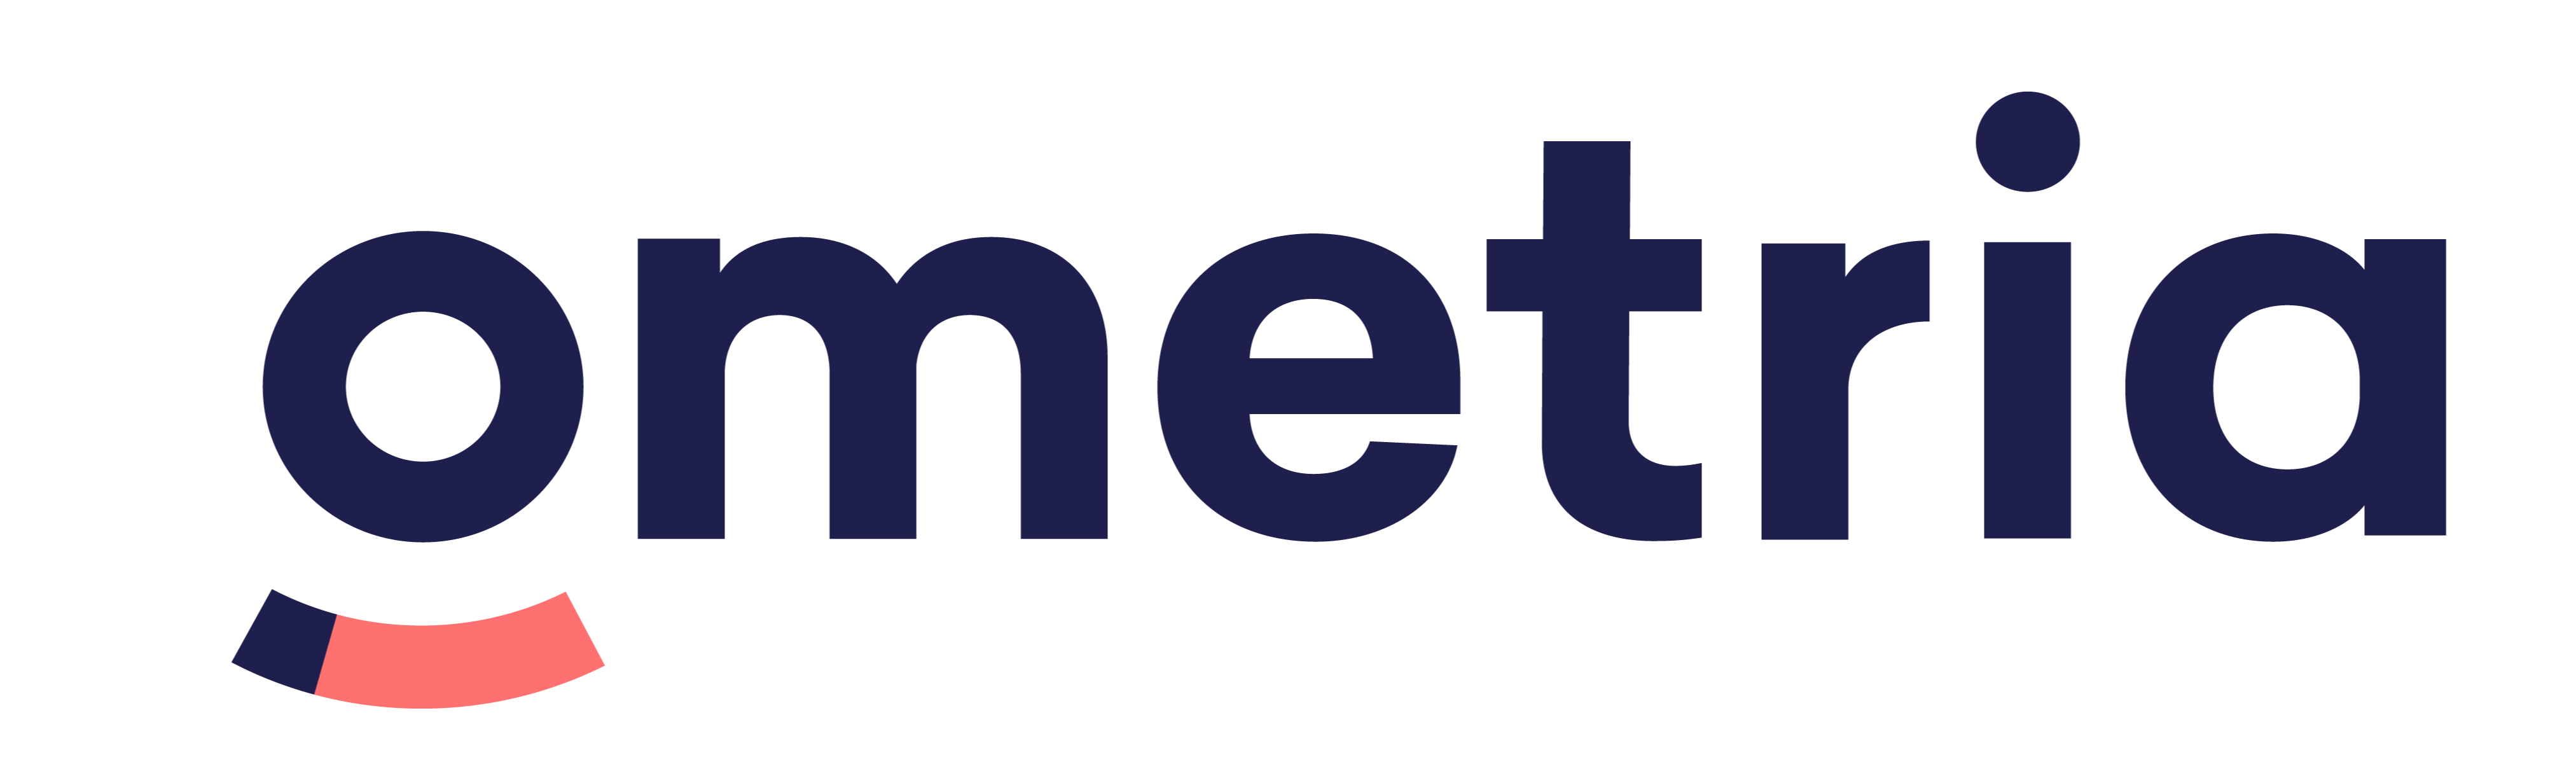 Ometria logo (light BG).png